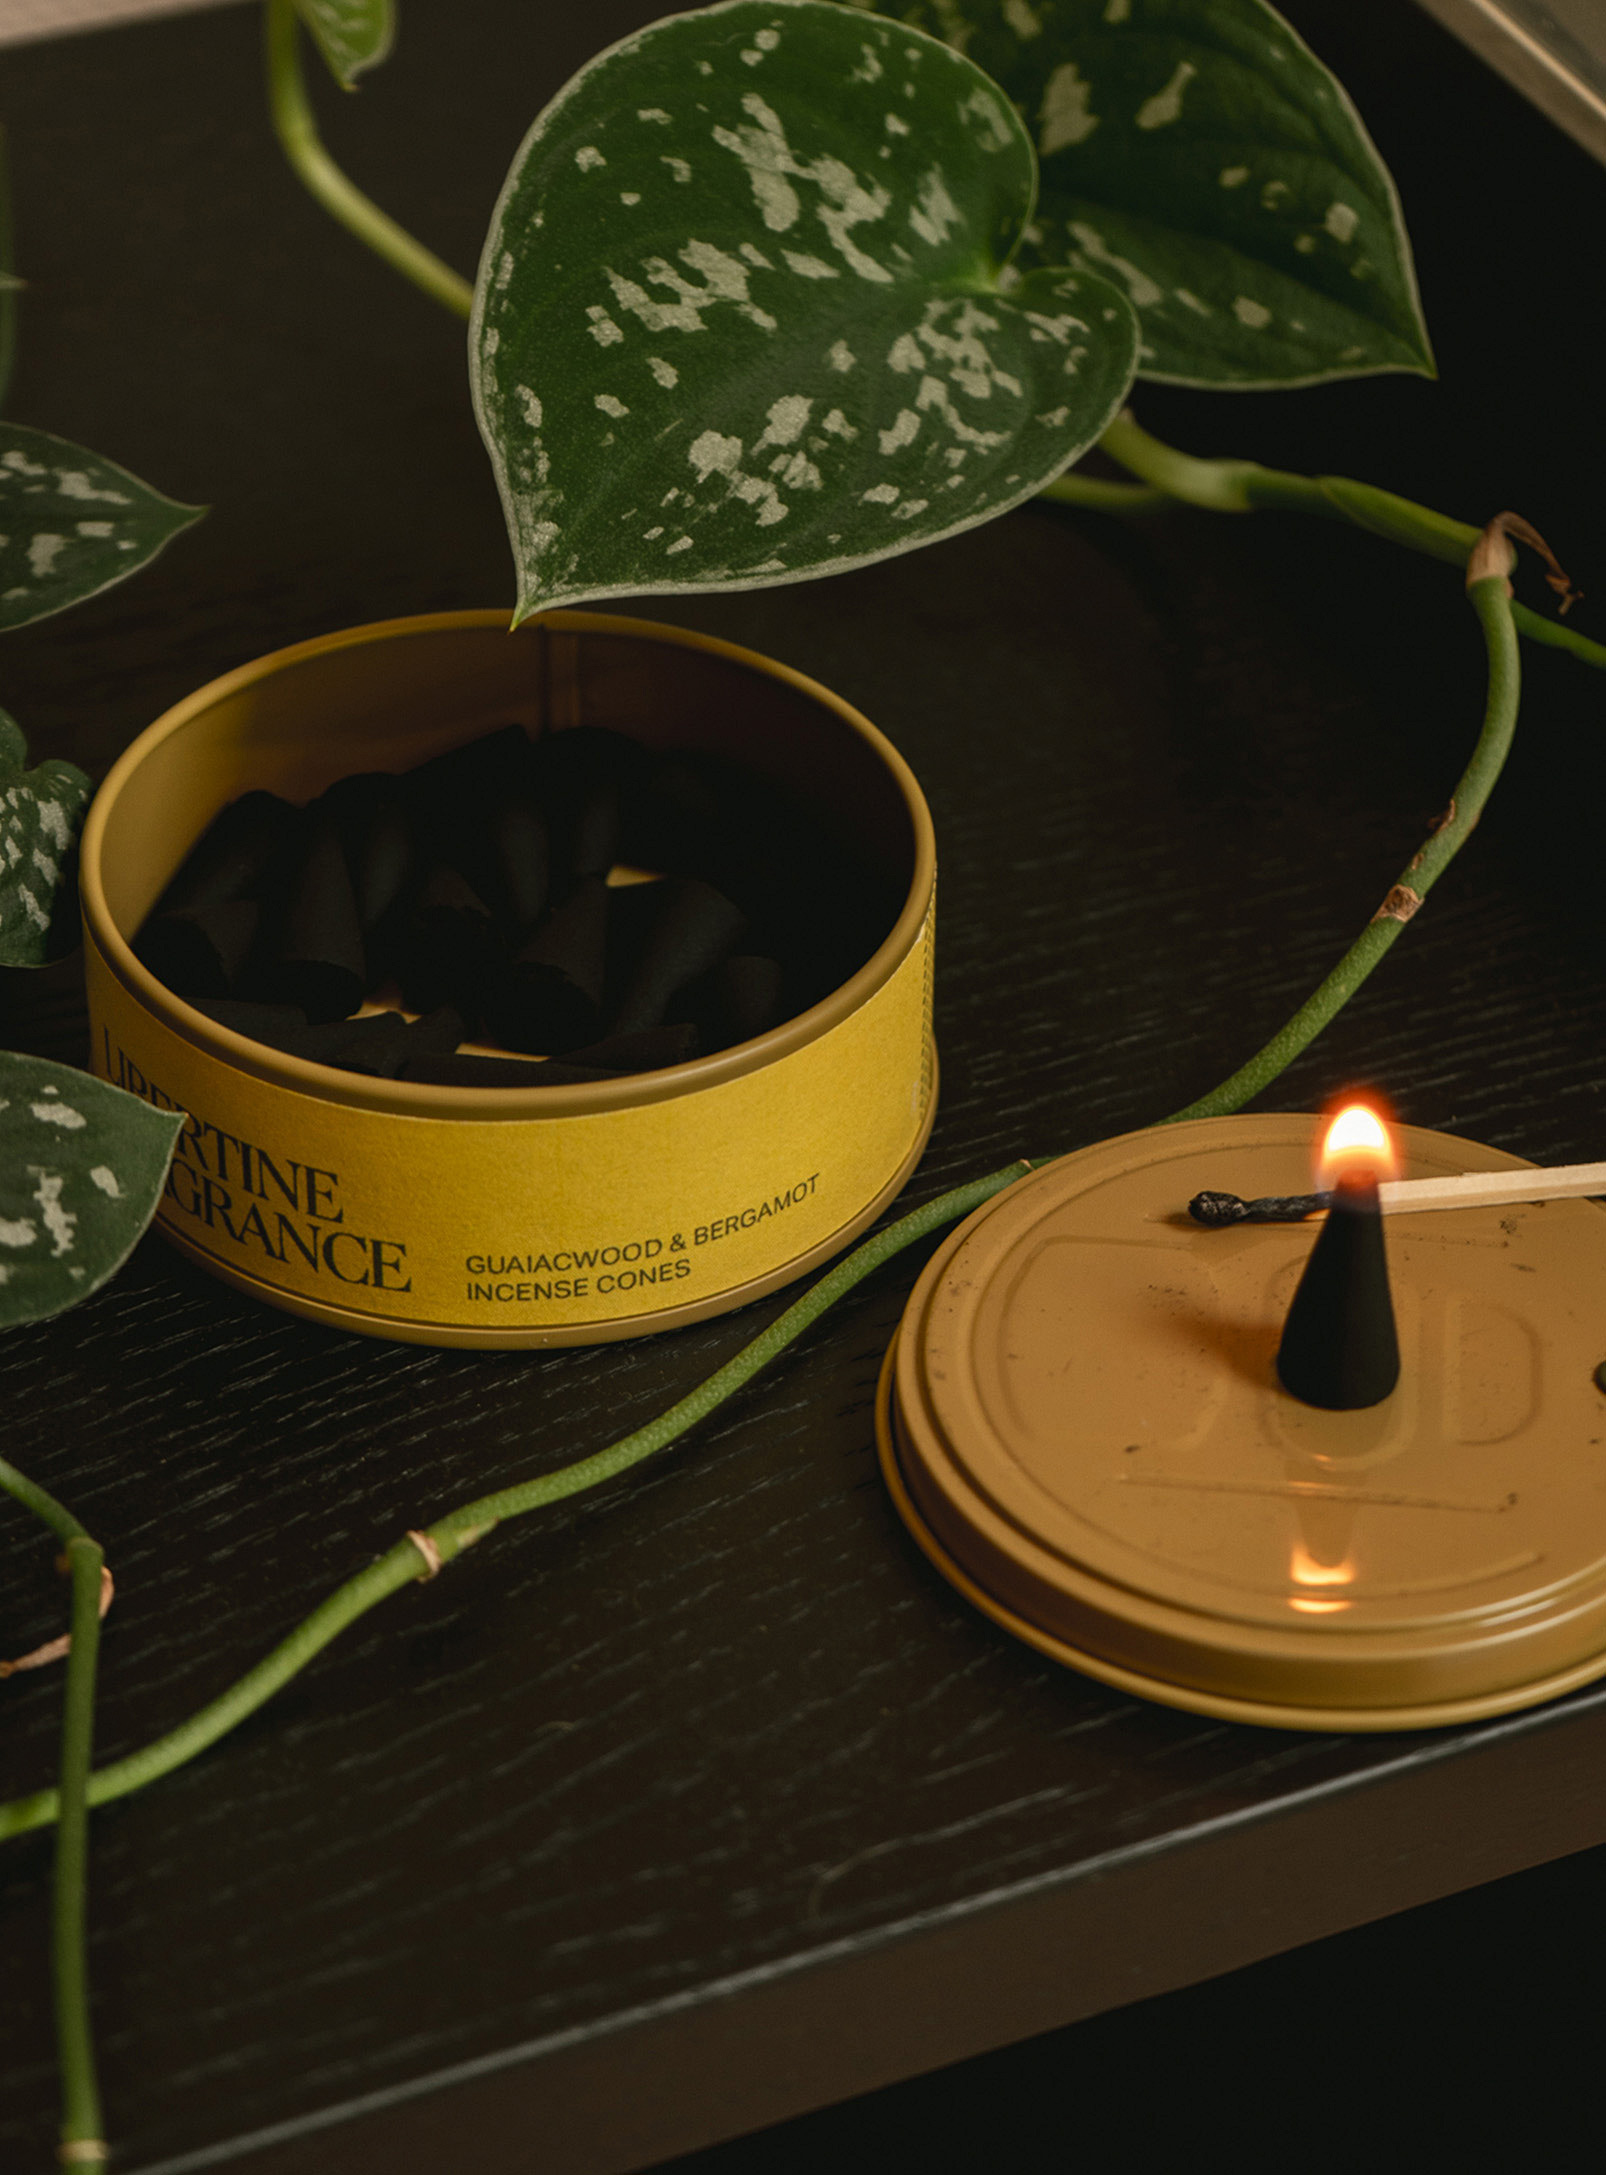 Libertine Fragrance - Guaiacwood Bergamot incense cones